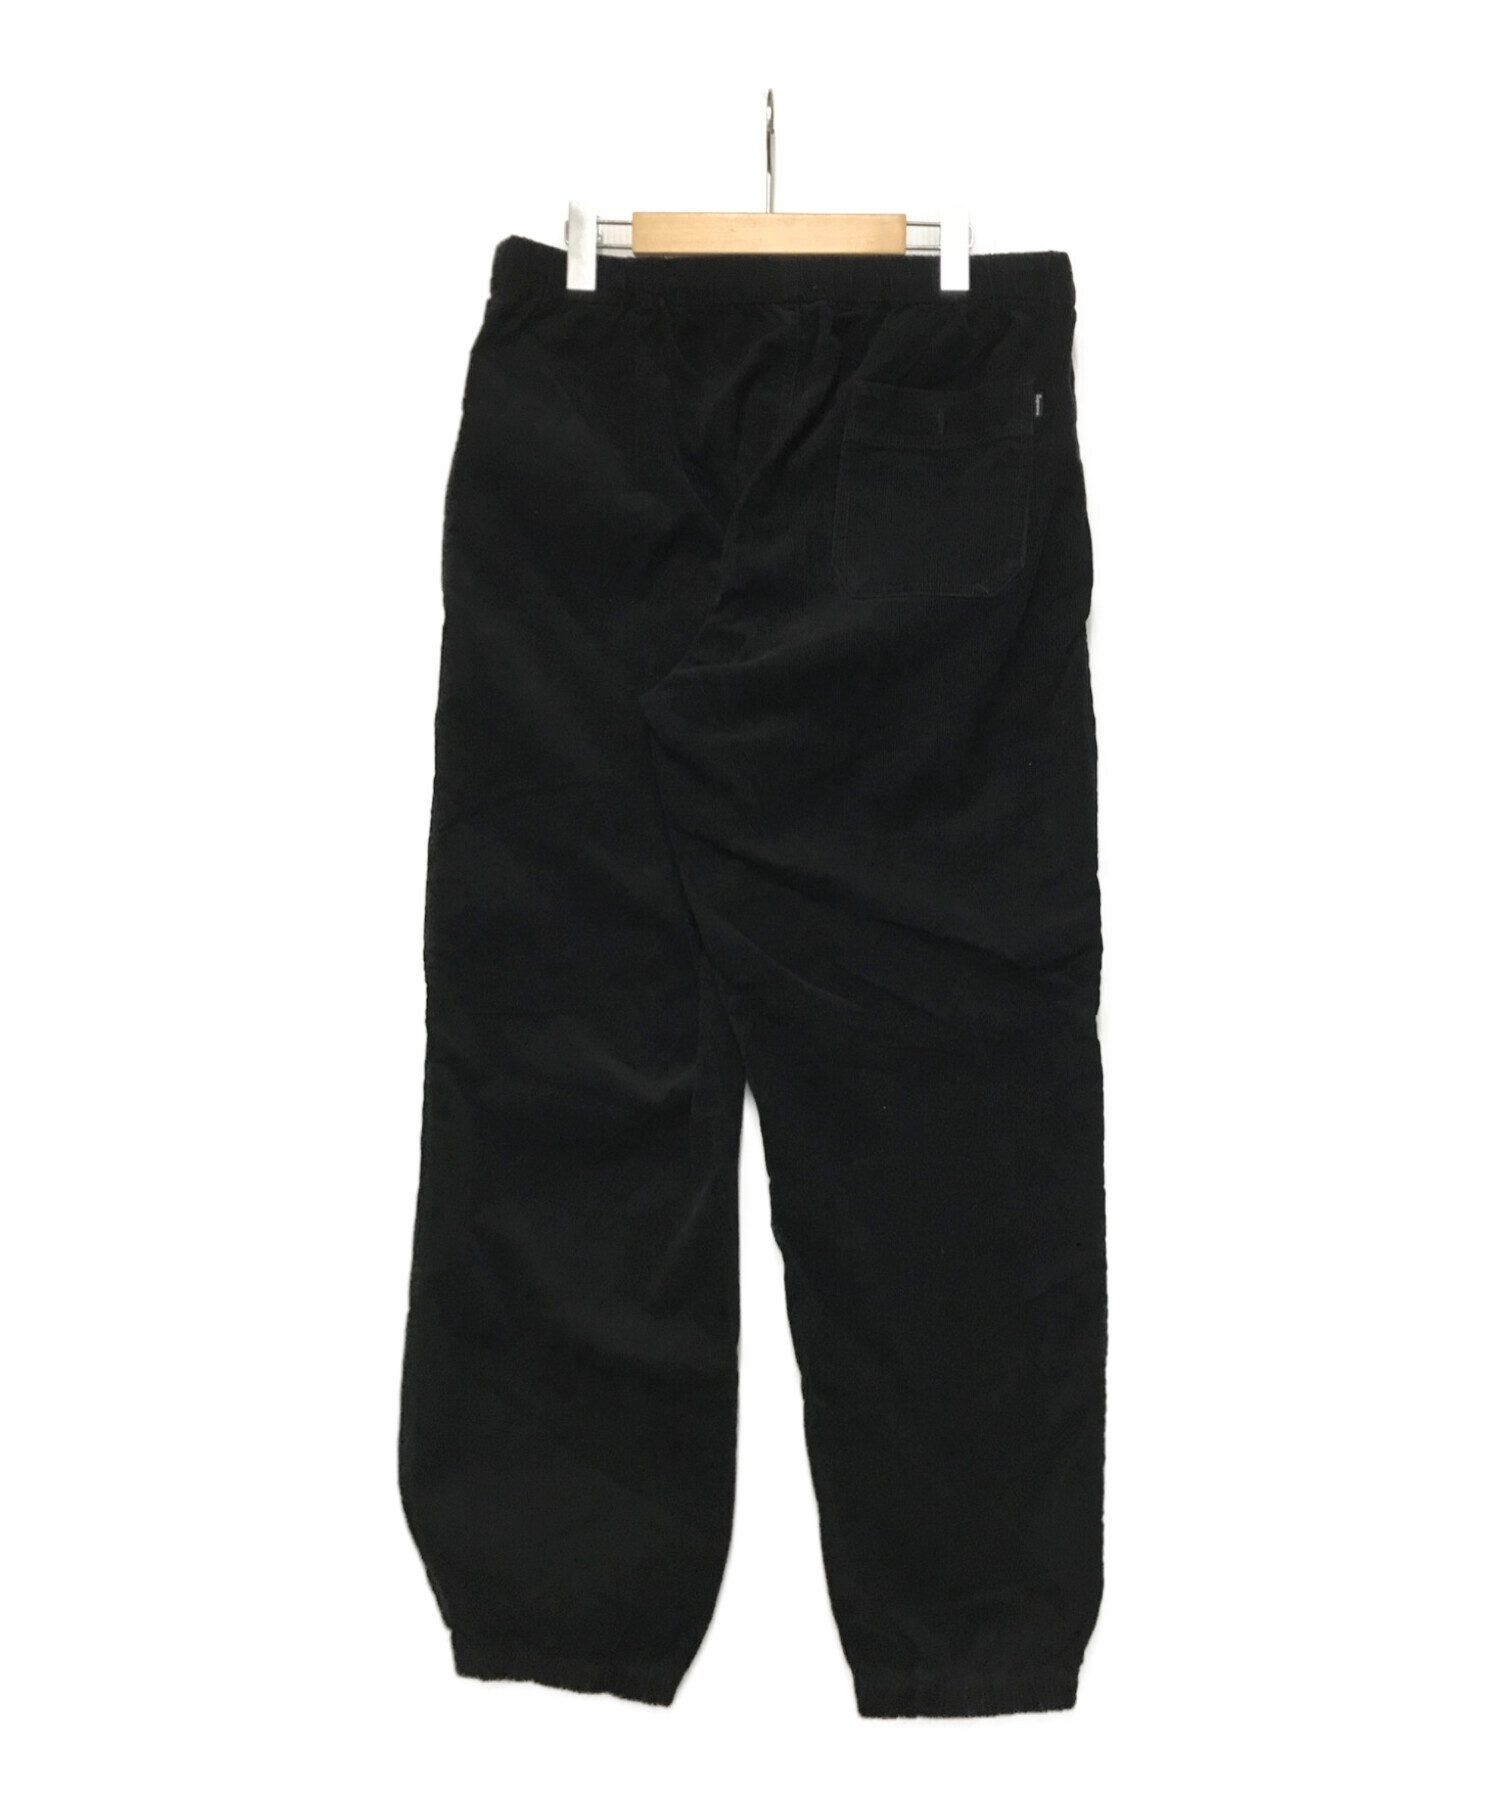 SUPREME (シュプリーム) Corduroy Skate Pant ブラック サイズ:Ⅼ